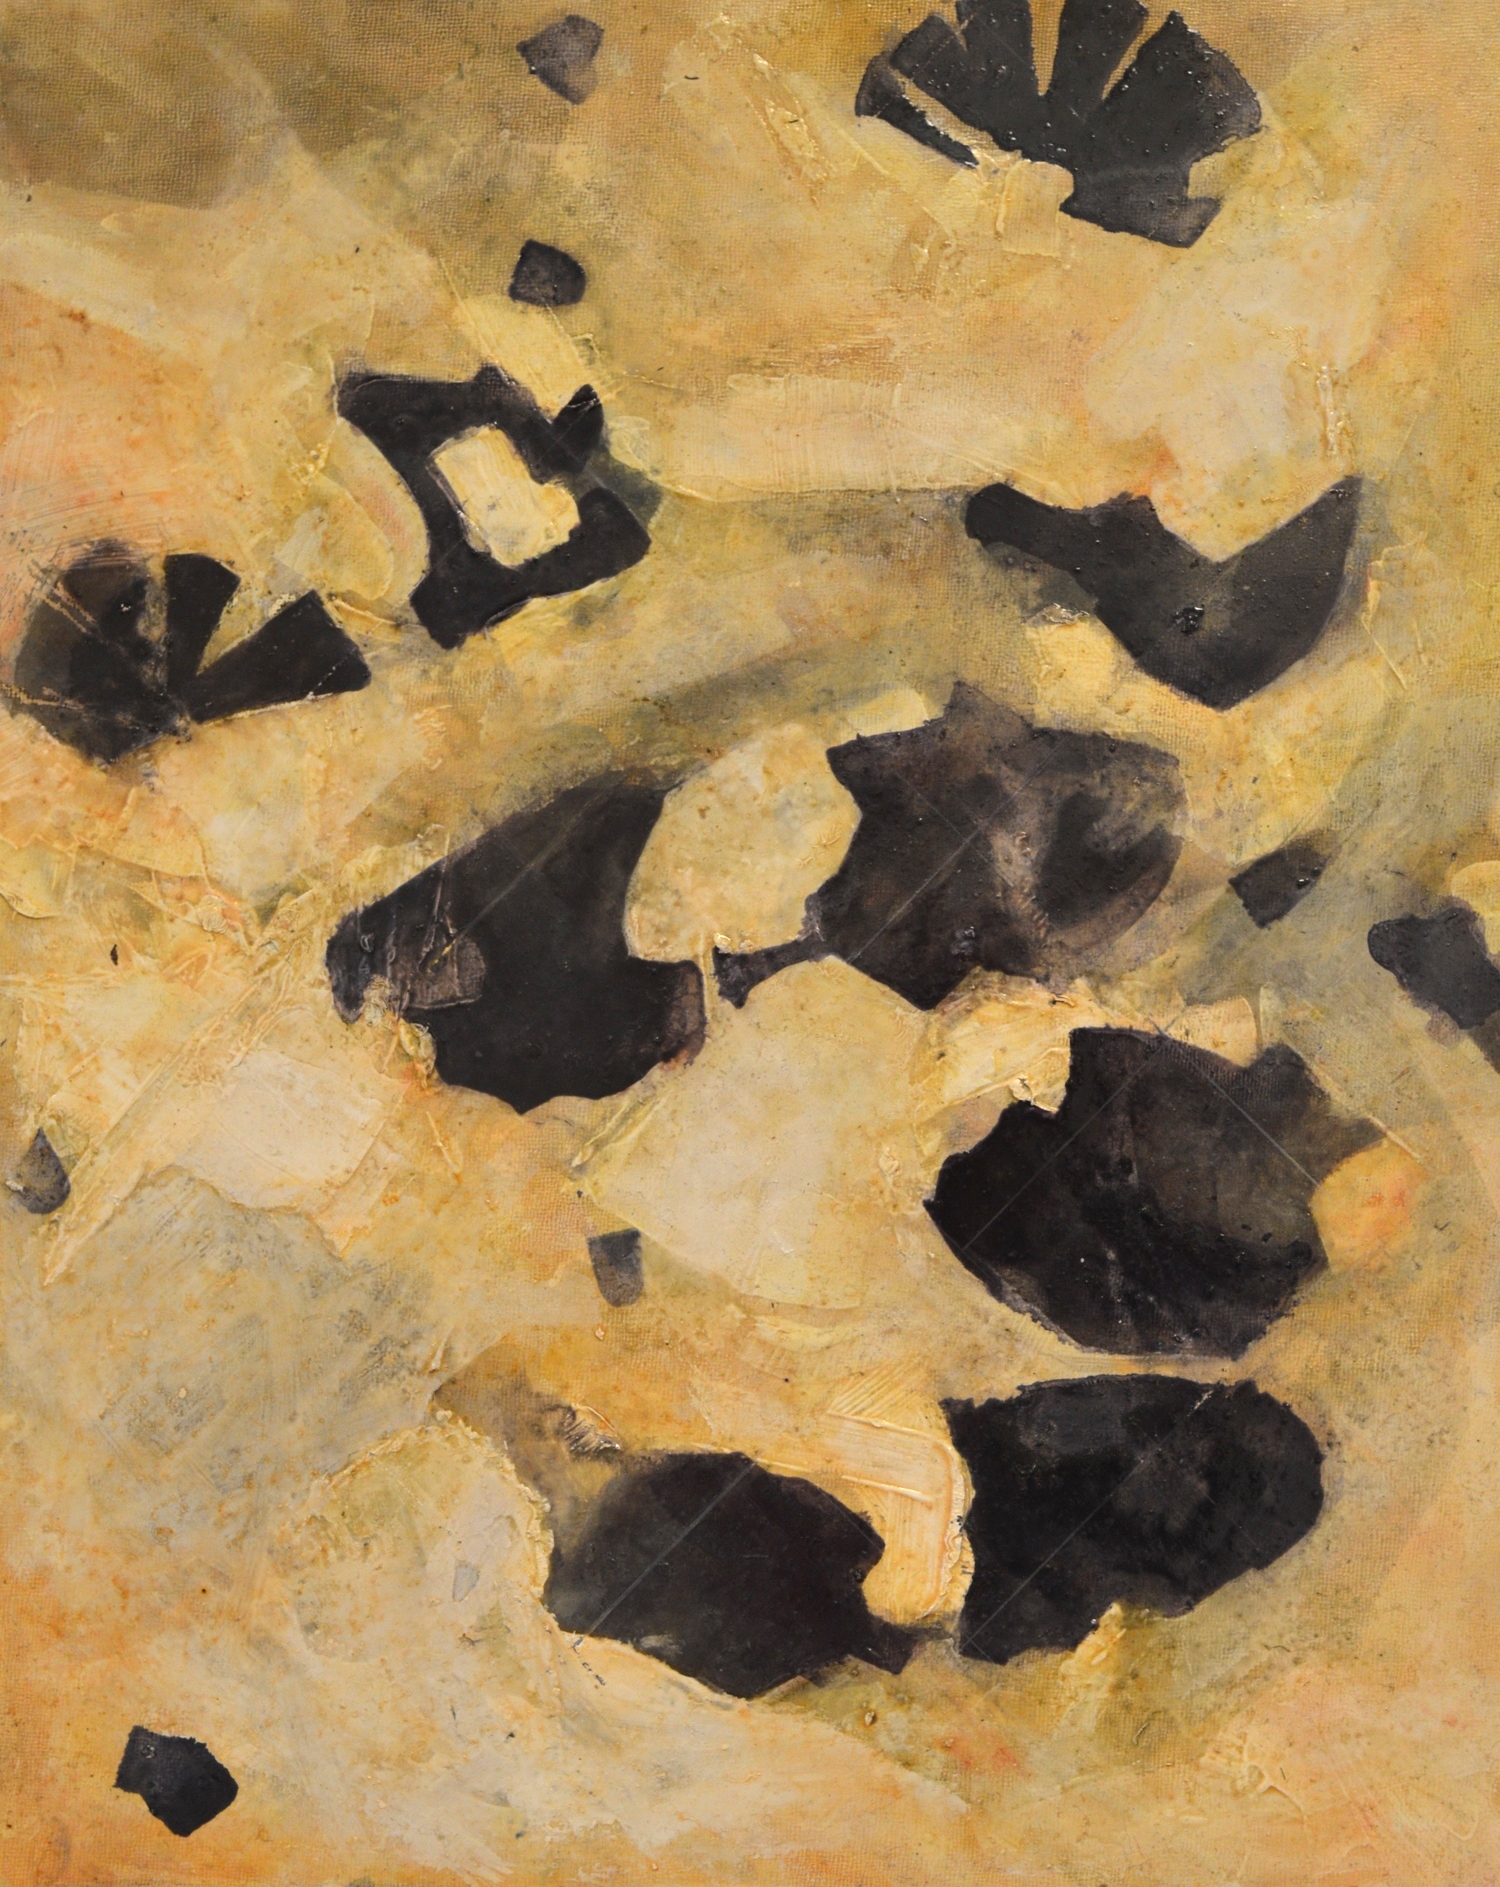   Impressions , Oil on Panel, 20 x 16", 2015 